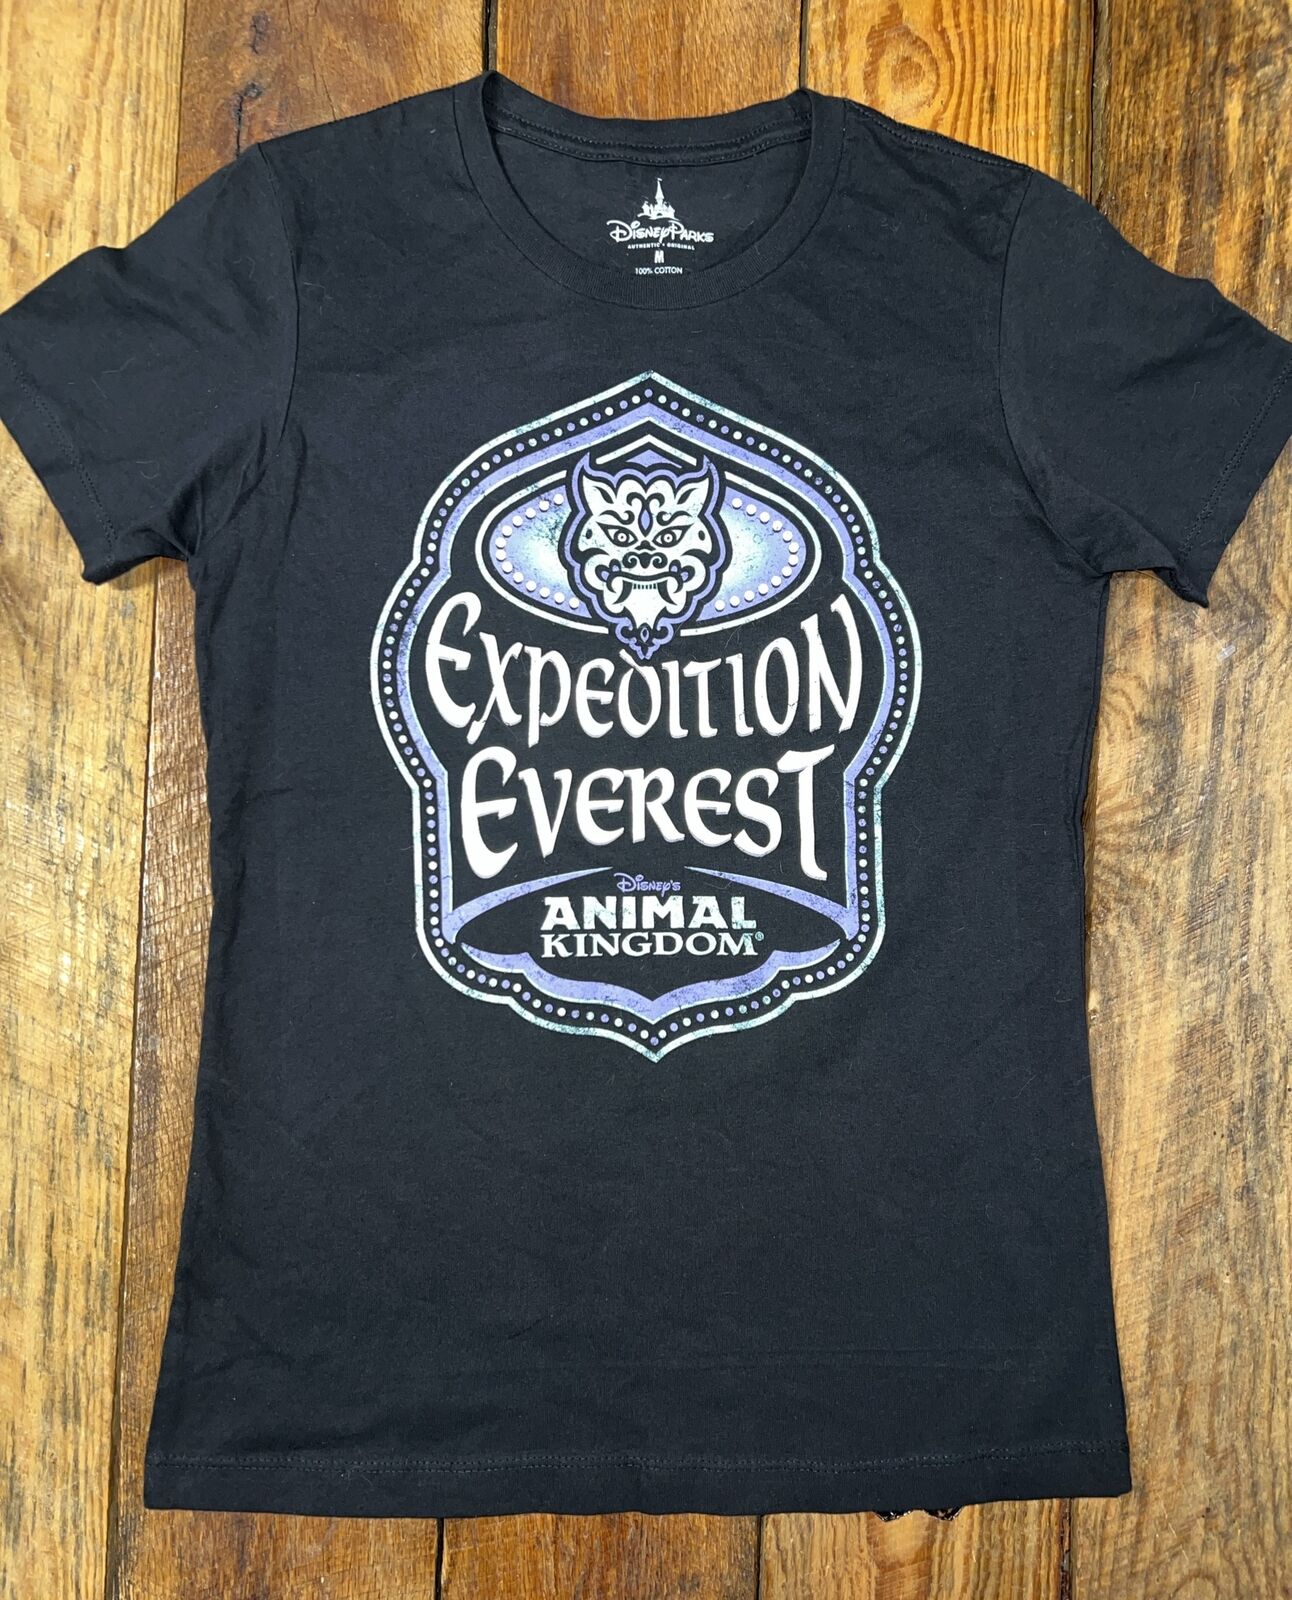 Disney Parks MEDIUM Ladies Tee Animal Kingdom Expedition Everest Womens Shirt